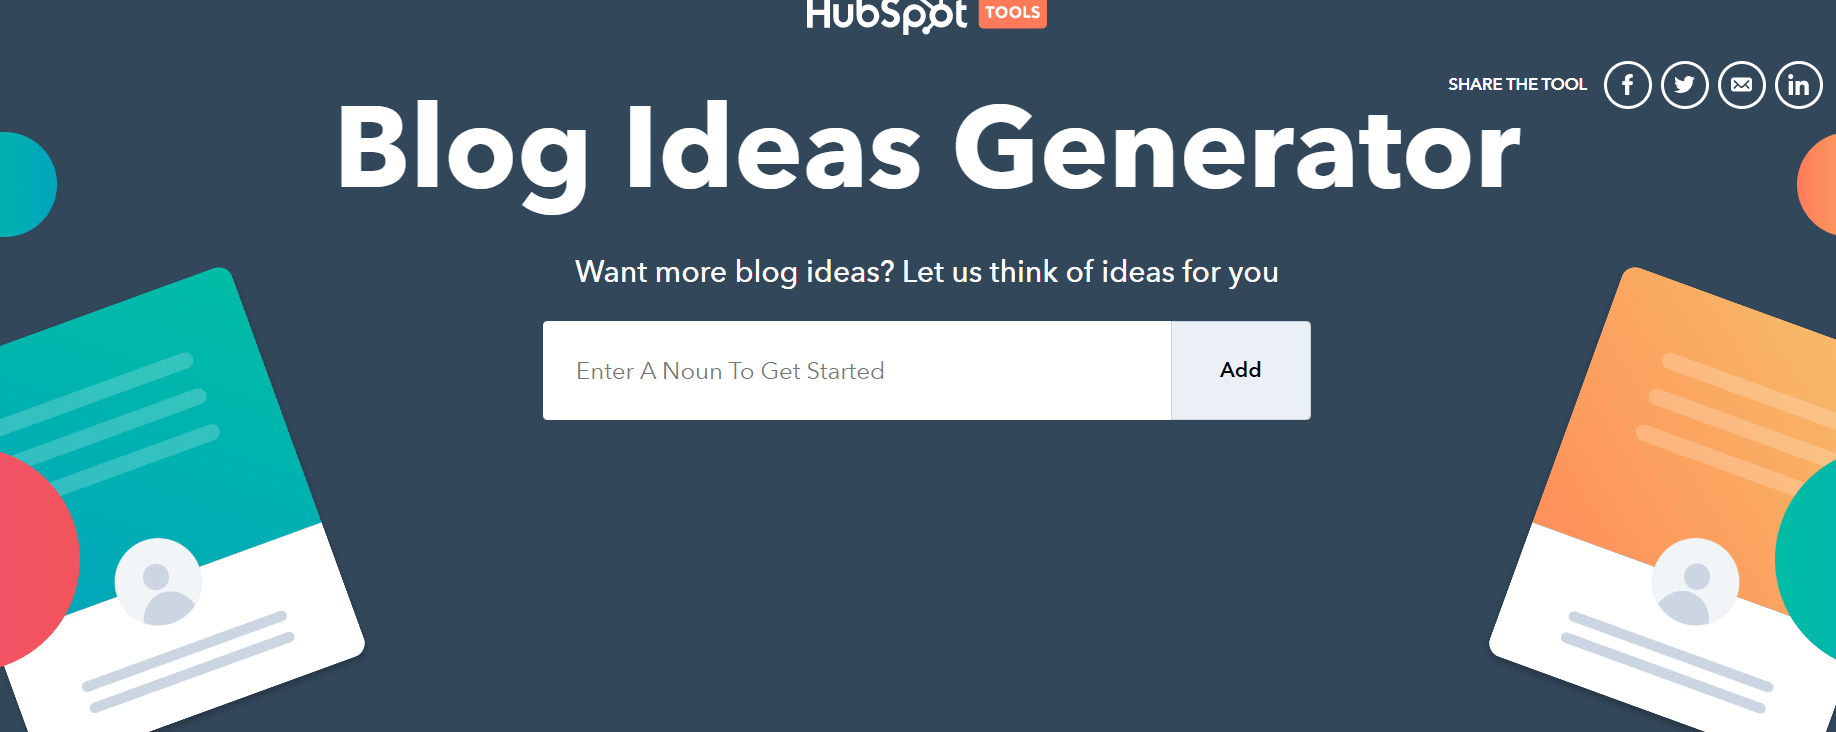 Blog ideas generator free tool